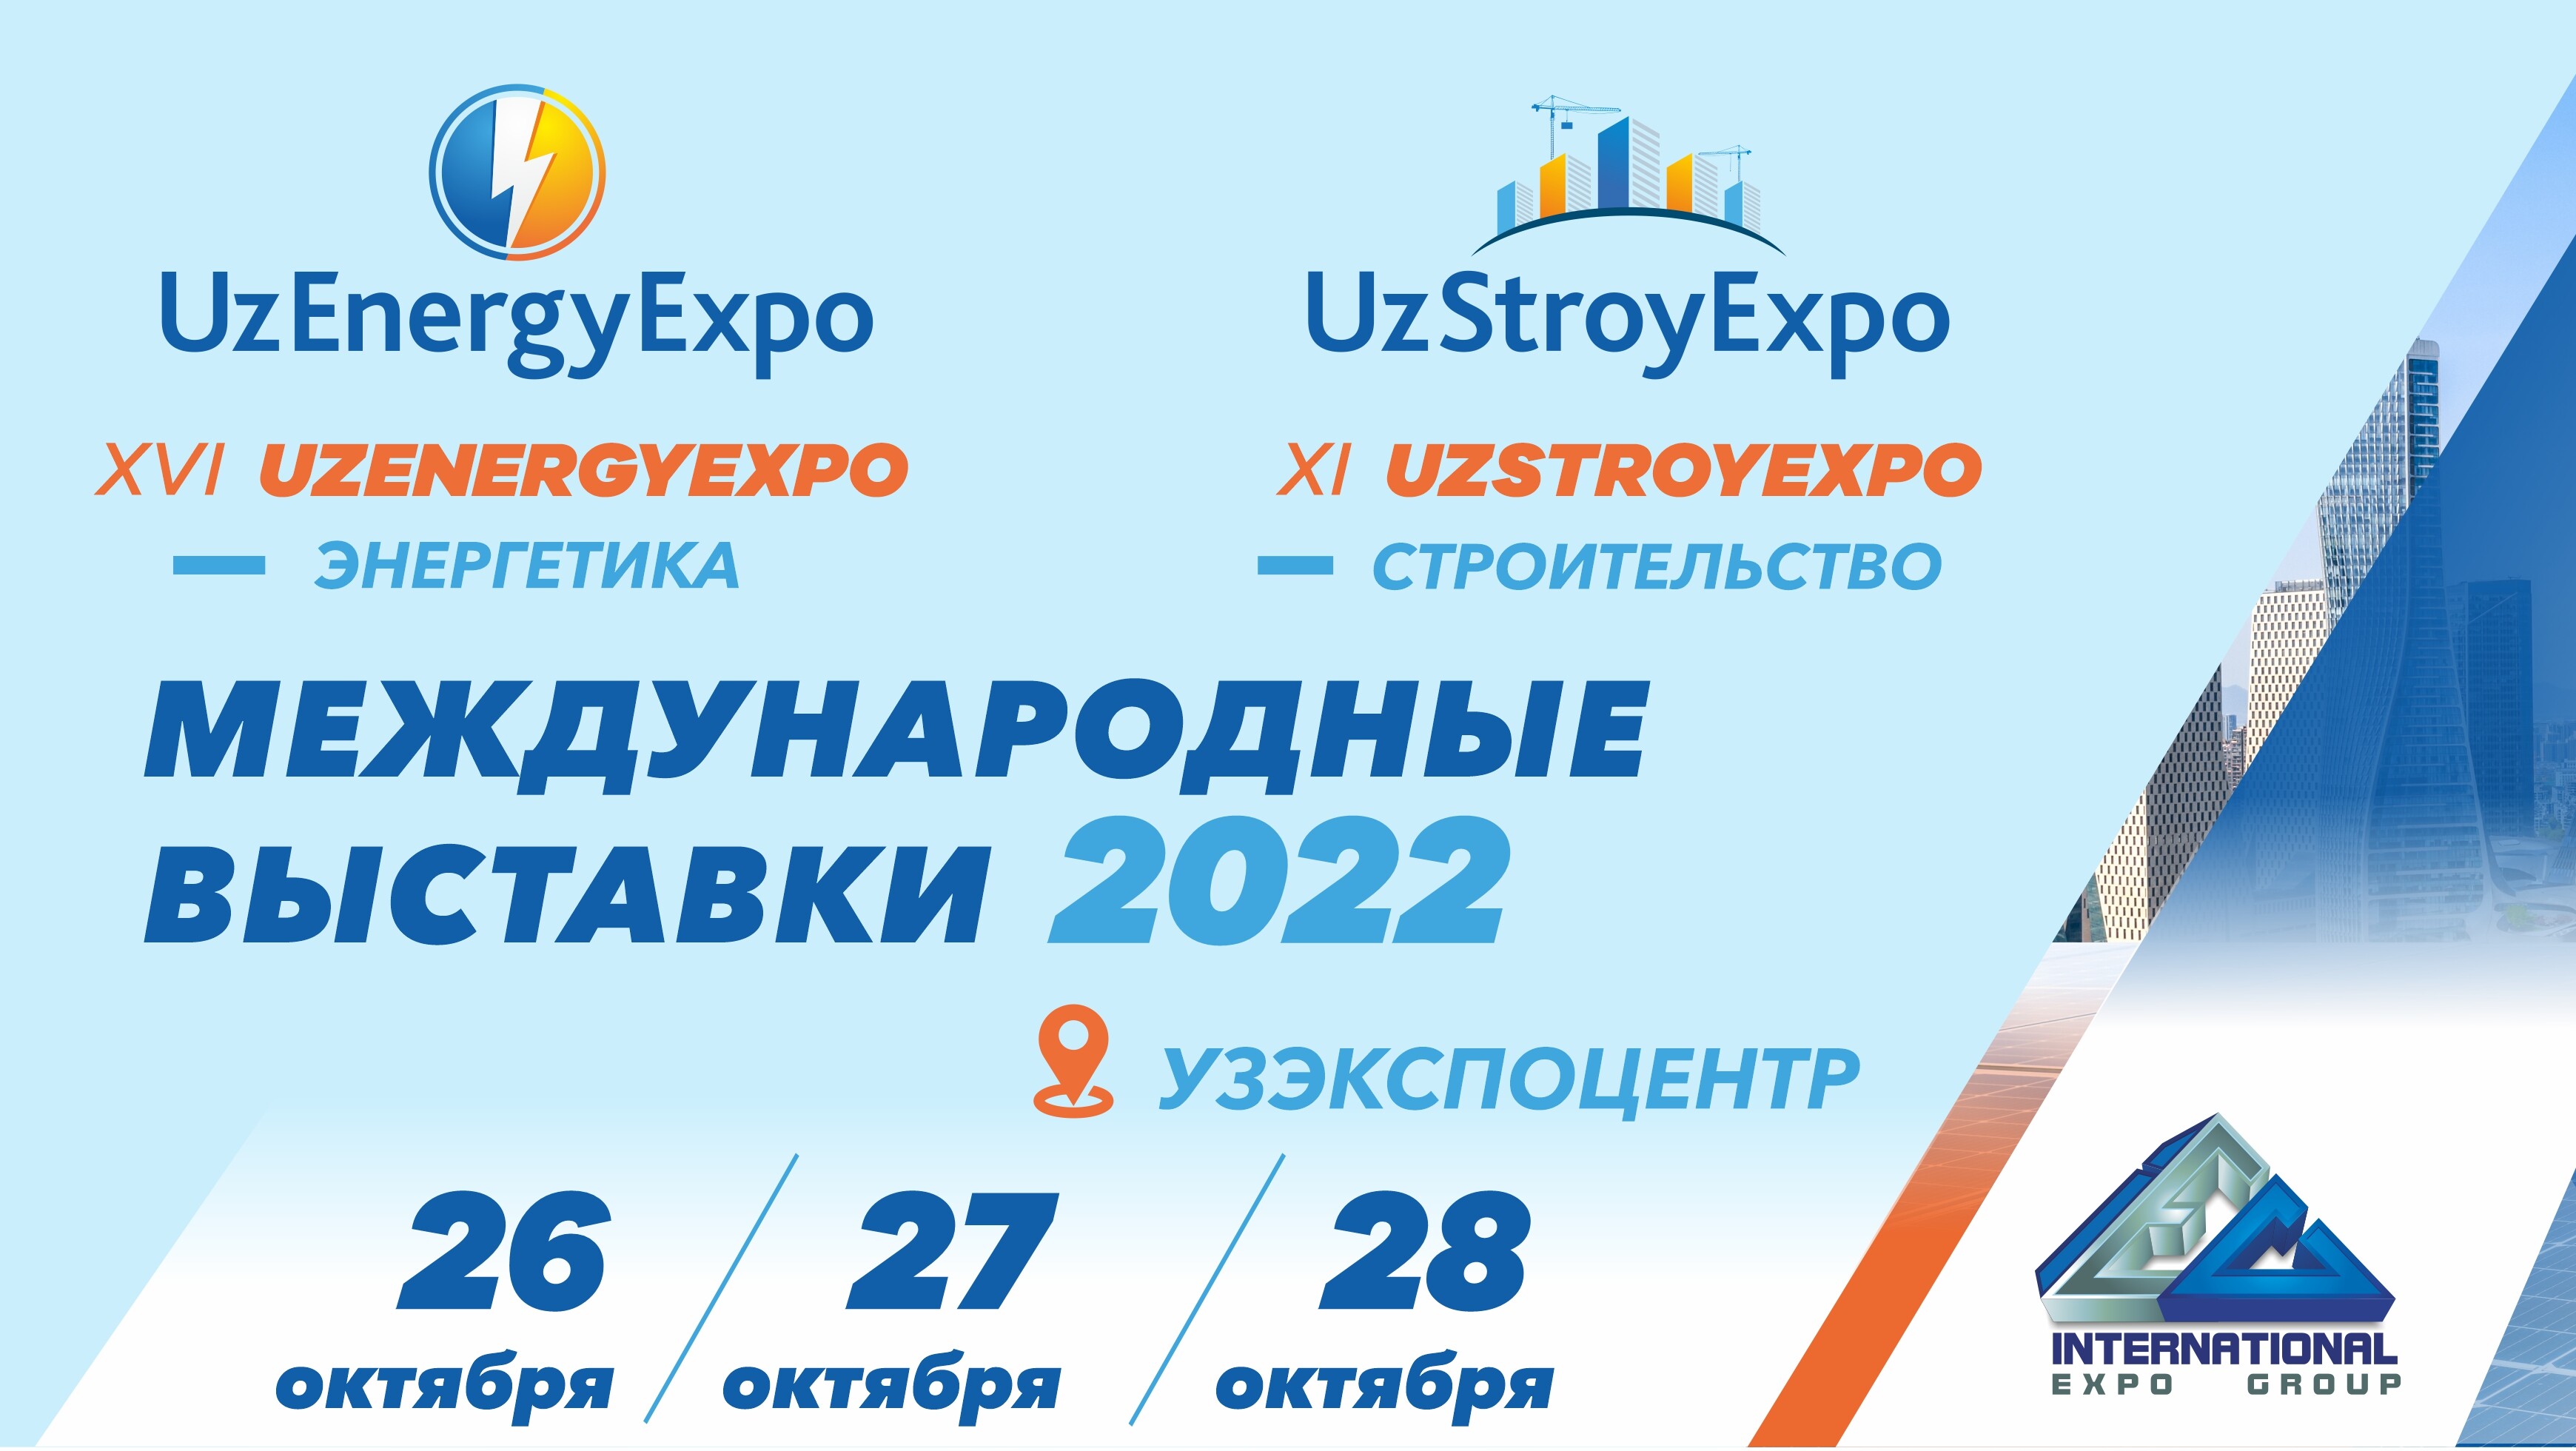 Две крупные международные выставки UzEnergyExpo 2022 и UzStroyExpo 2022 пройдут в Ташкенте